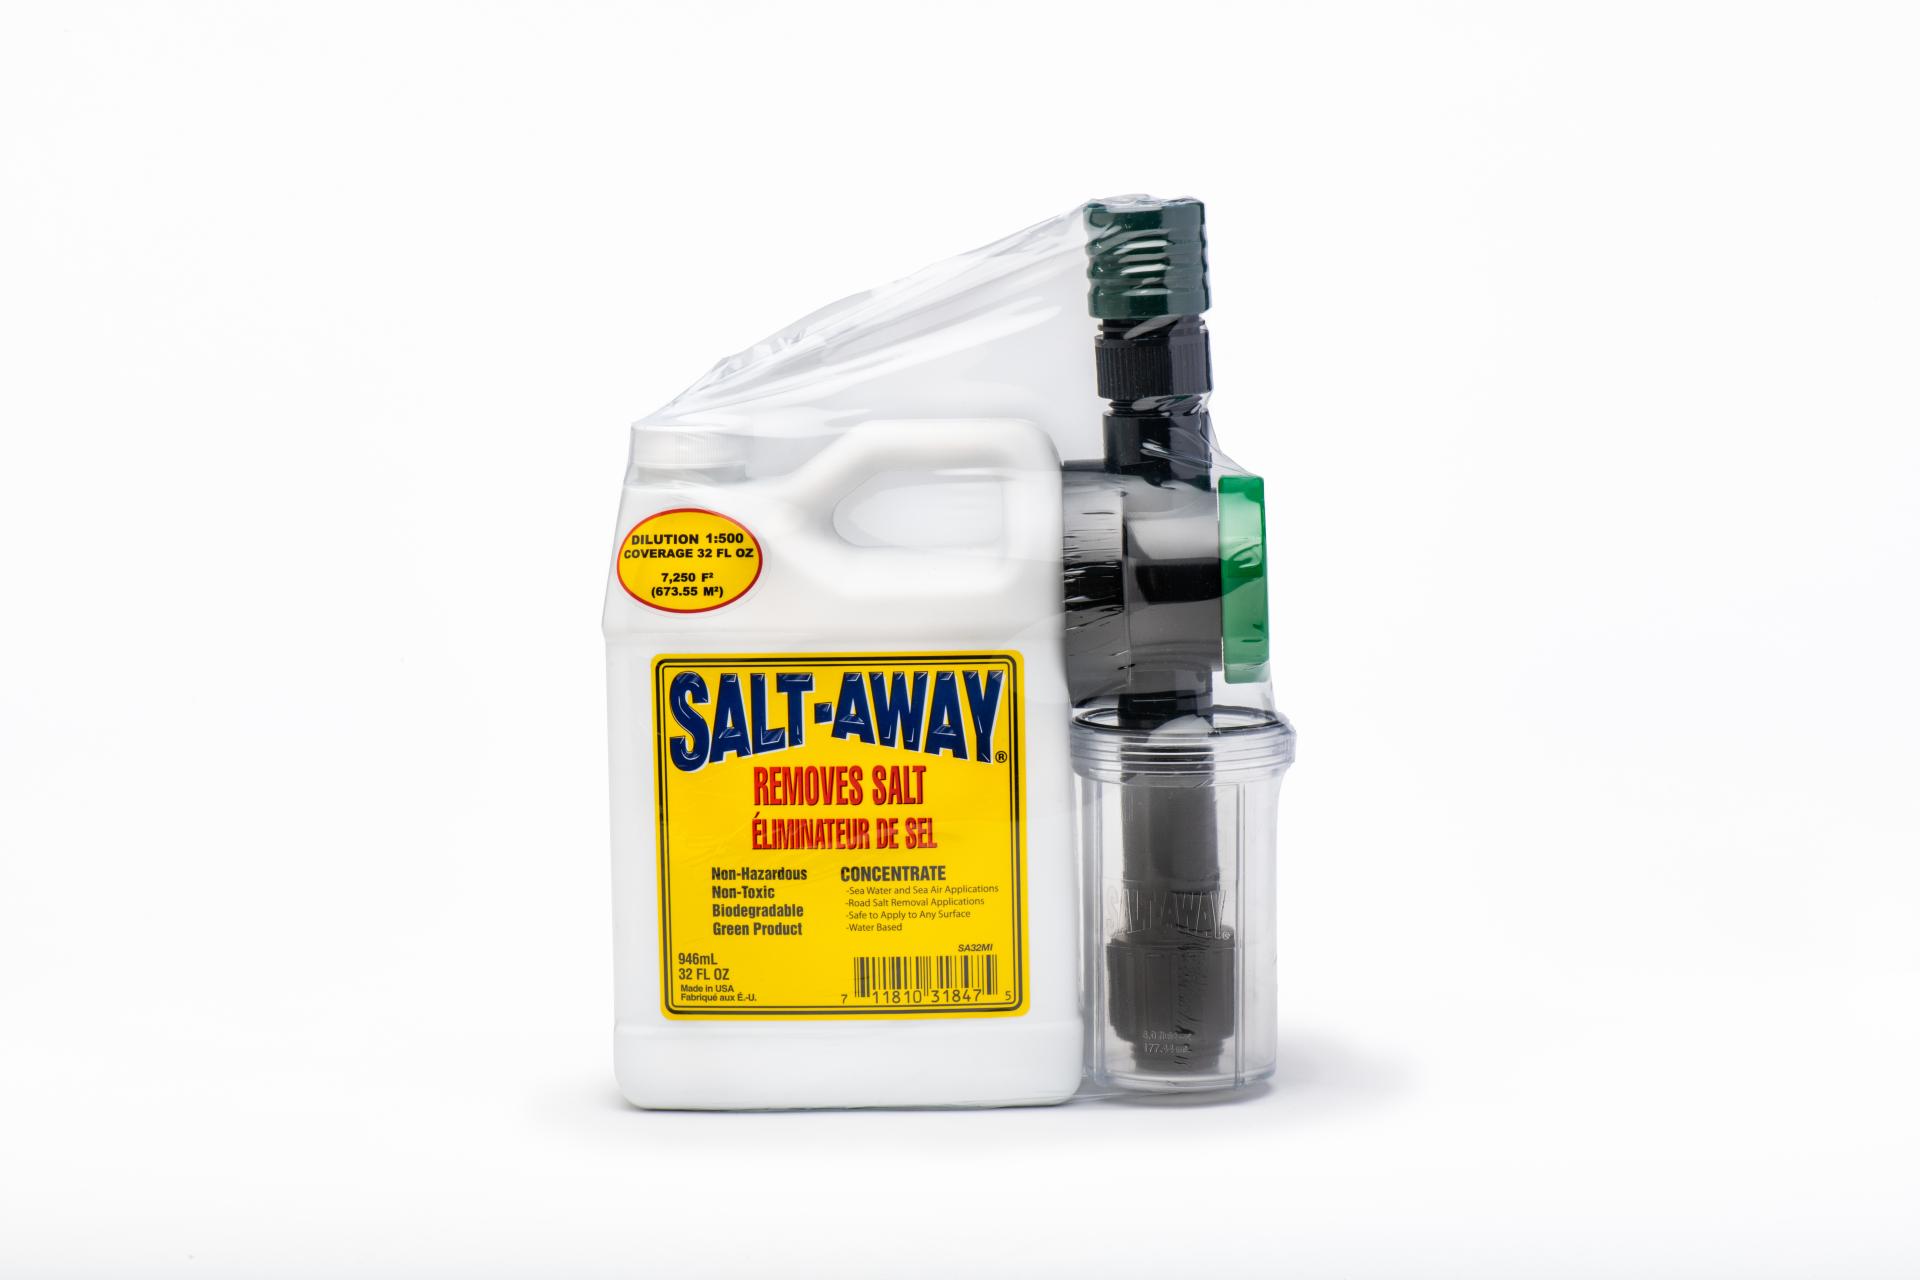 Salt Away Salt Water Rinse Kit SA32M